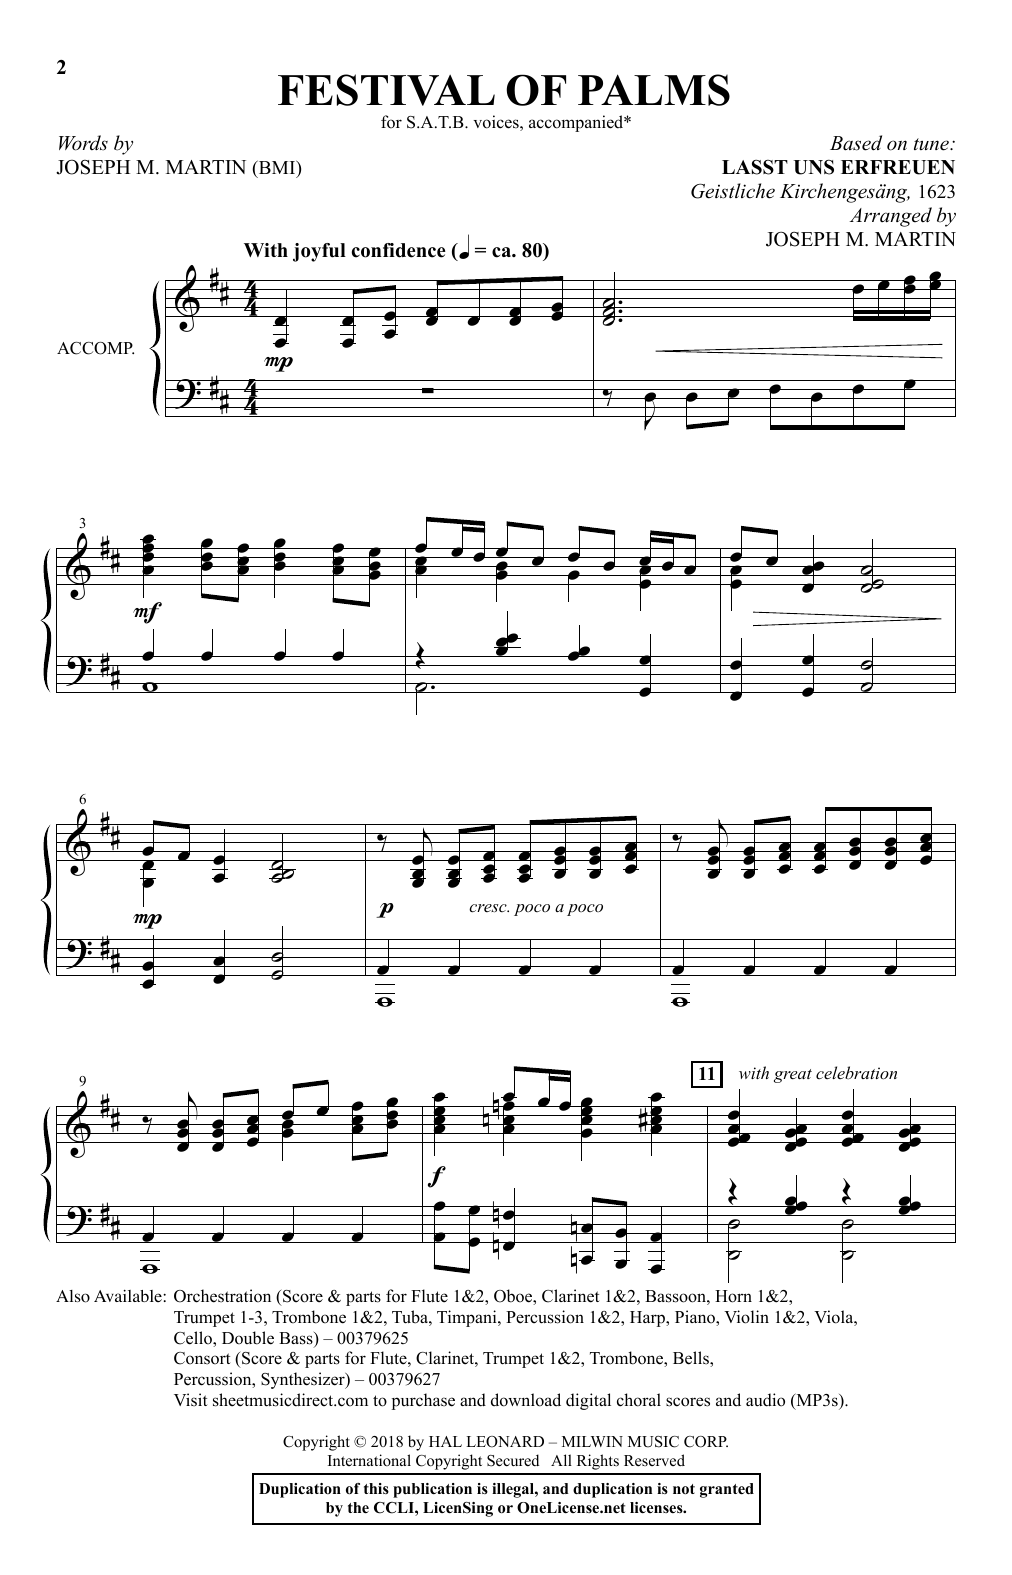 Joseph M. Martin Festival of Palms Sheet Music Notes & Chords for SATB Choir - Download or Print PDF